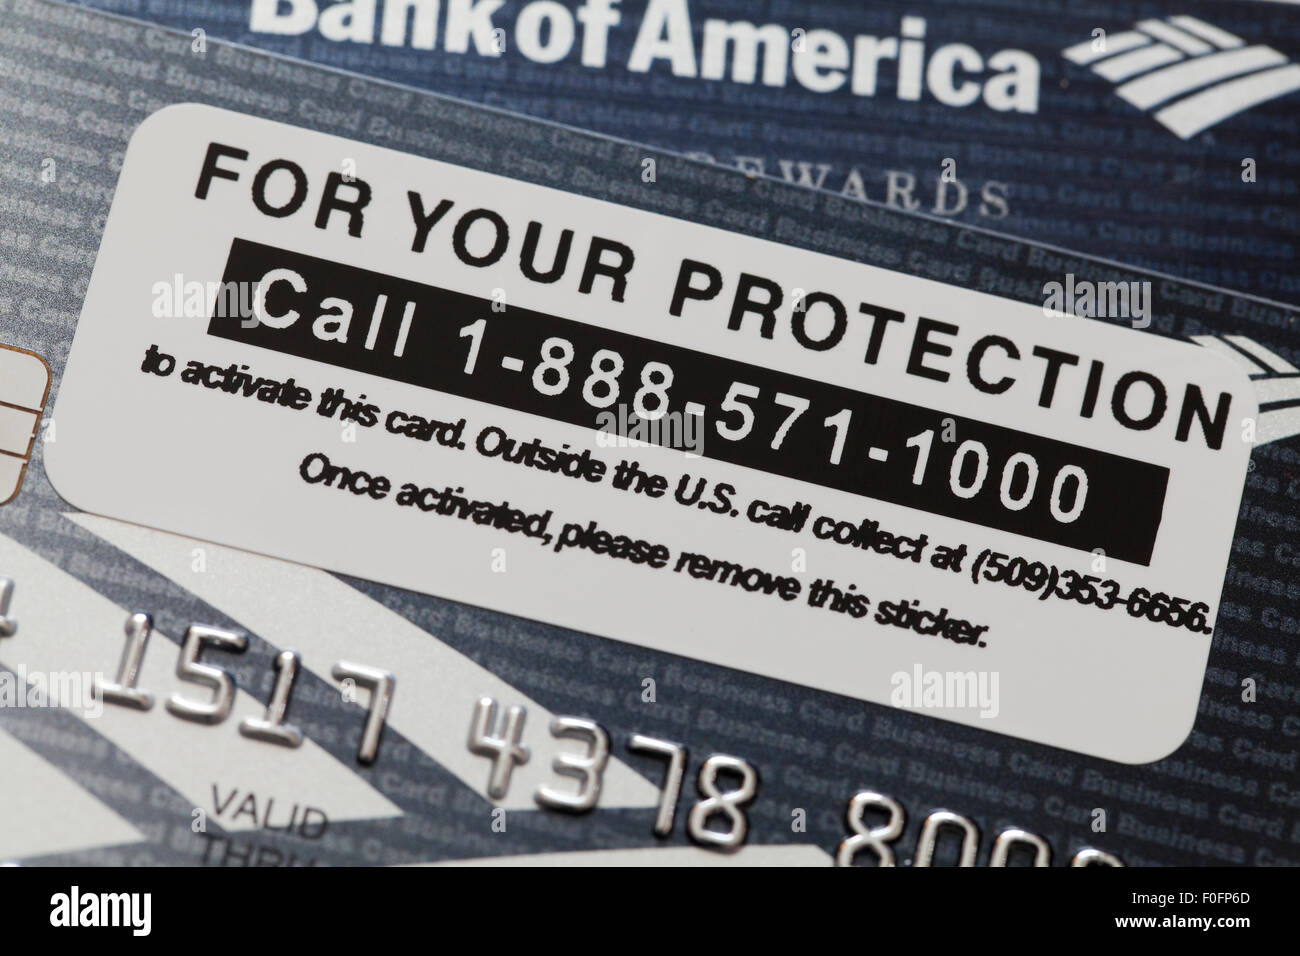 Activate Visa Debit Card Bank Of America